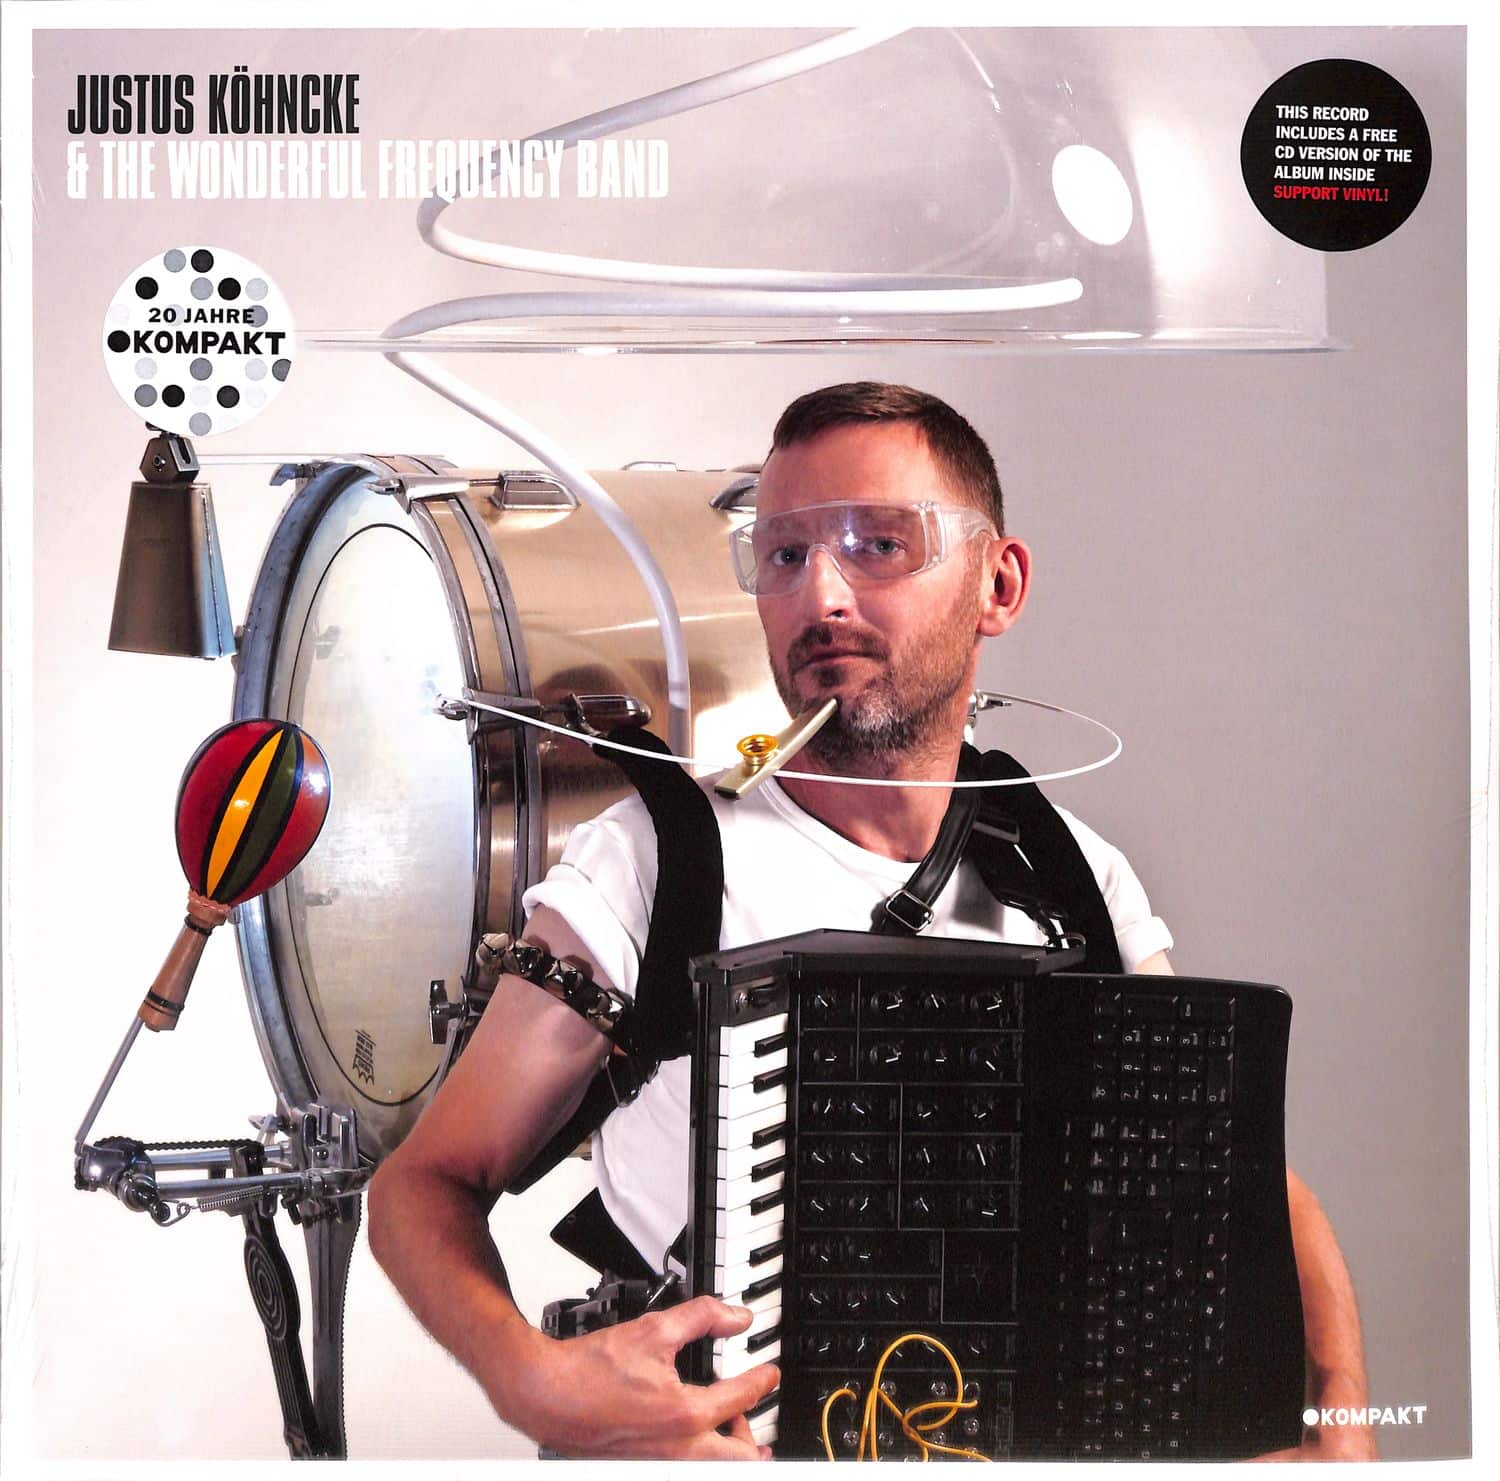 Justus Koehncke - JUSTUS KOEHNCKE & THE WONDERFUL FREQUENCY BAND 